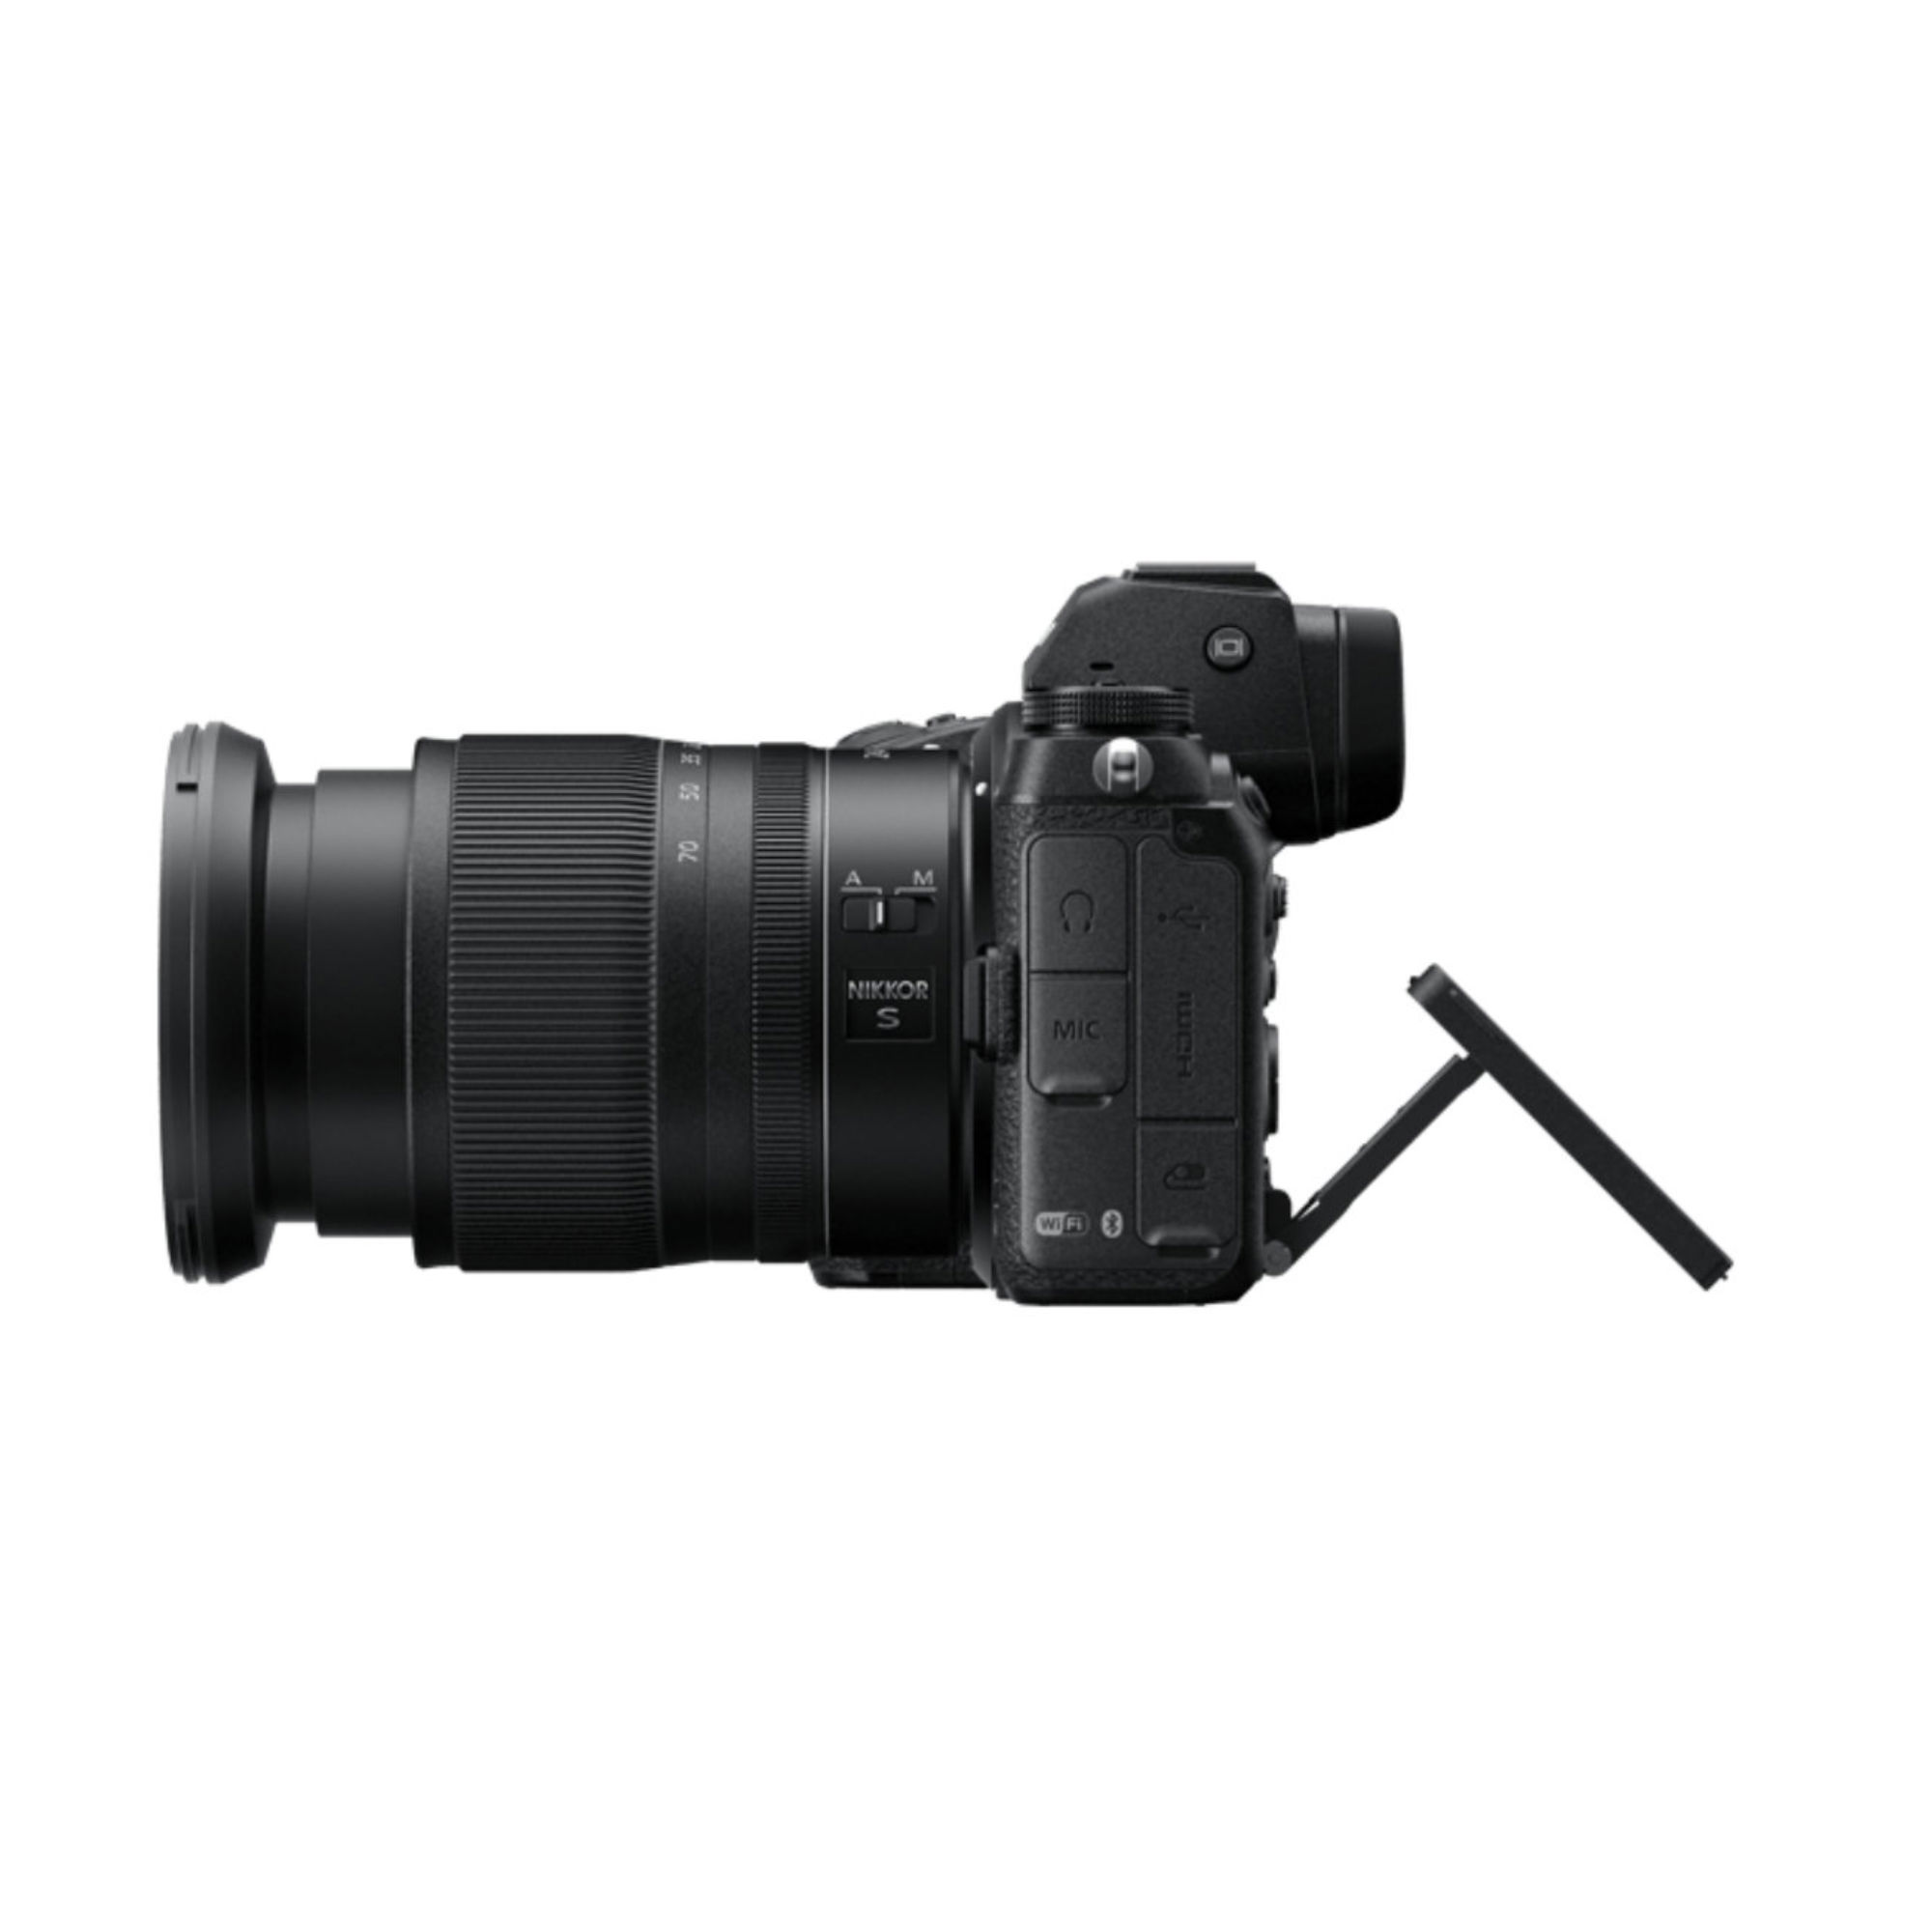 Nikon Z6 II with 24-70mm f/4 S Lens